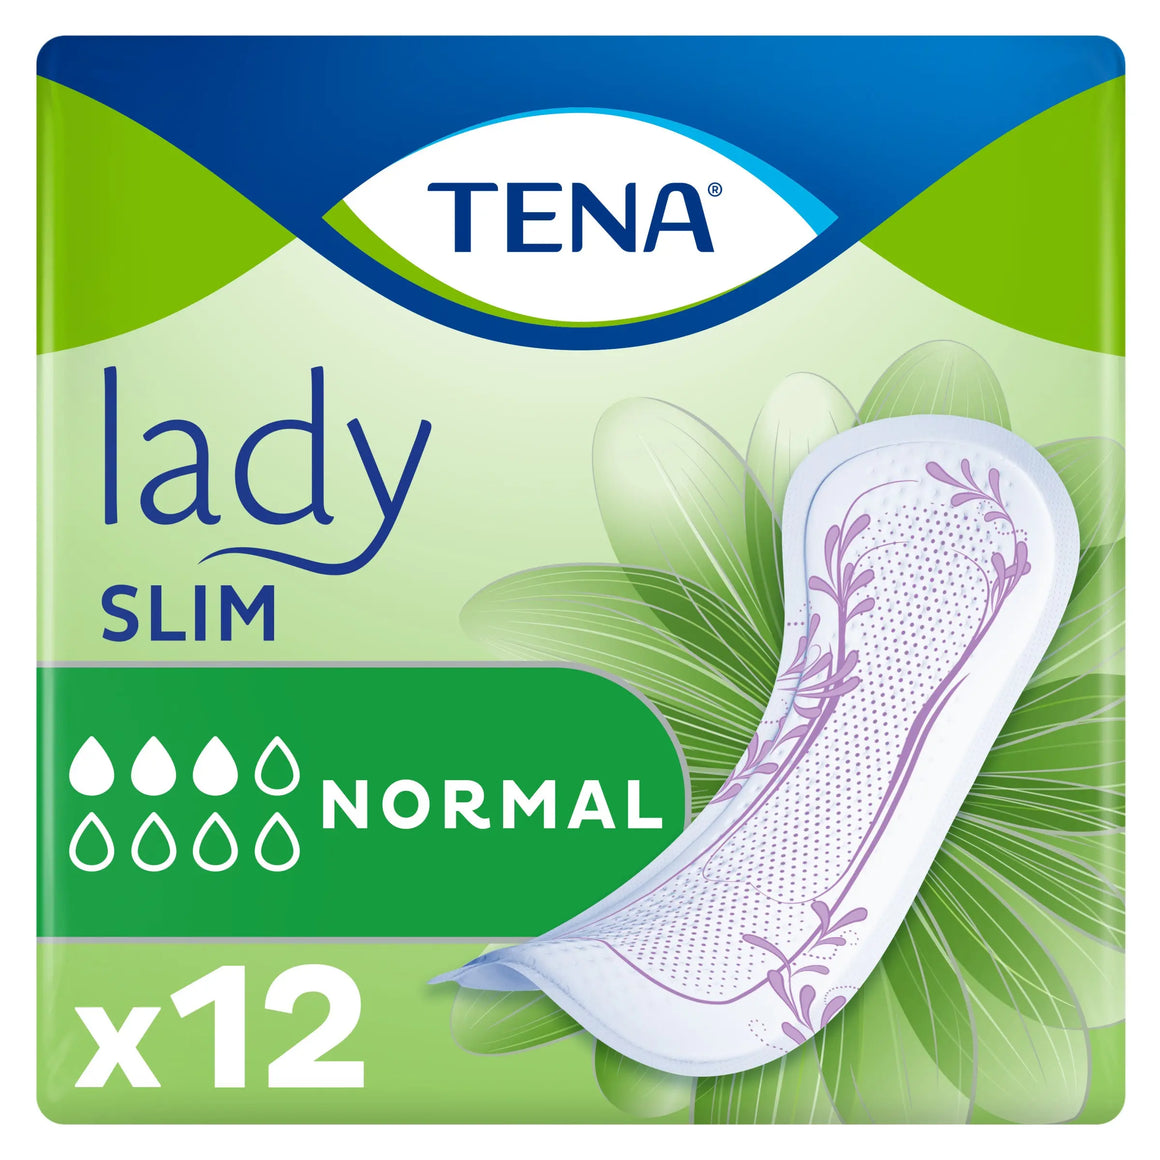 Tena Lady Normal 12 Pads Odor Control 3X protection TENA